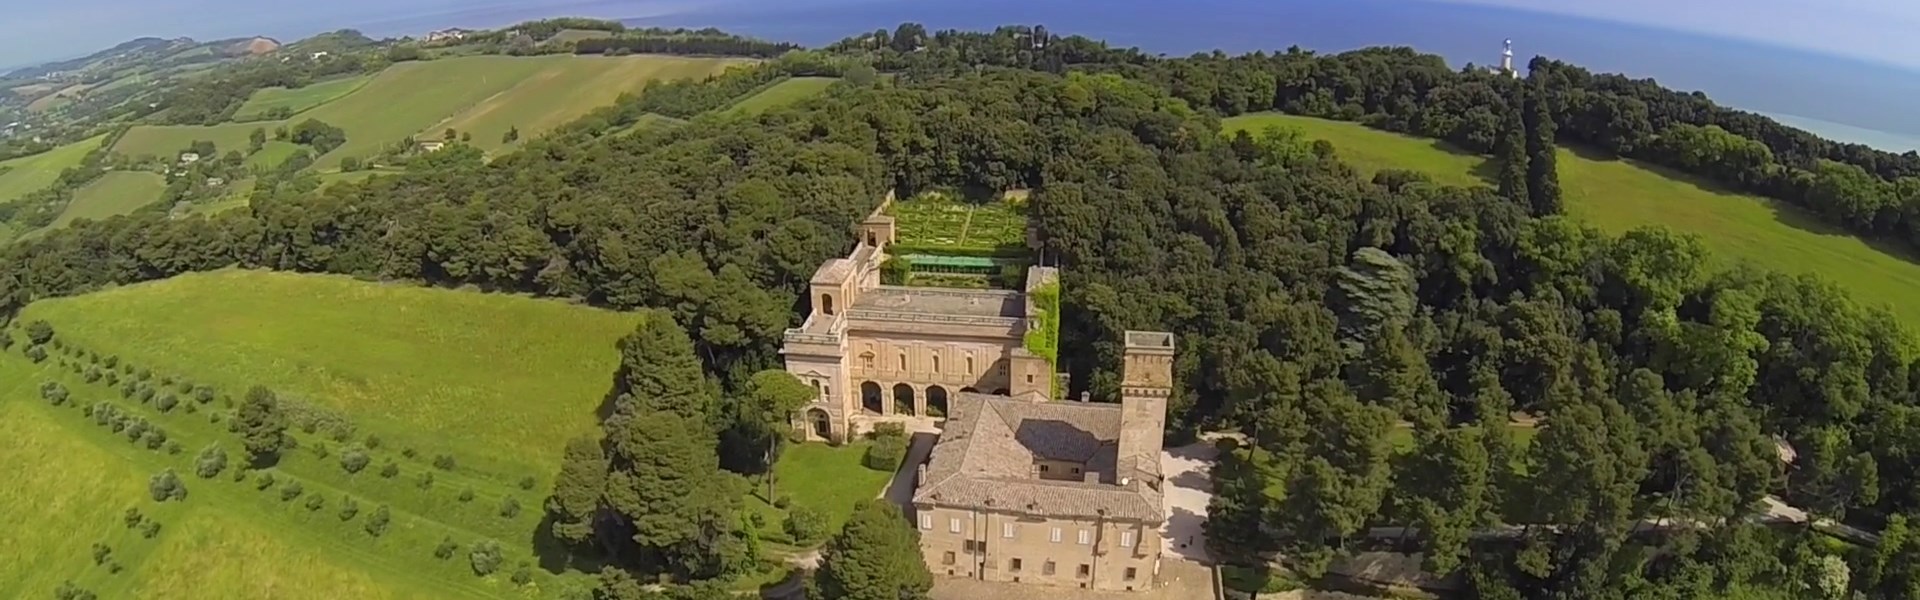 Pesaro - Villa imperiale